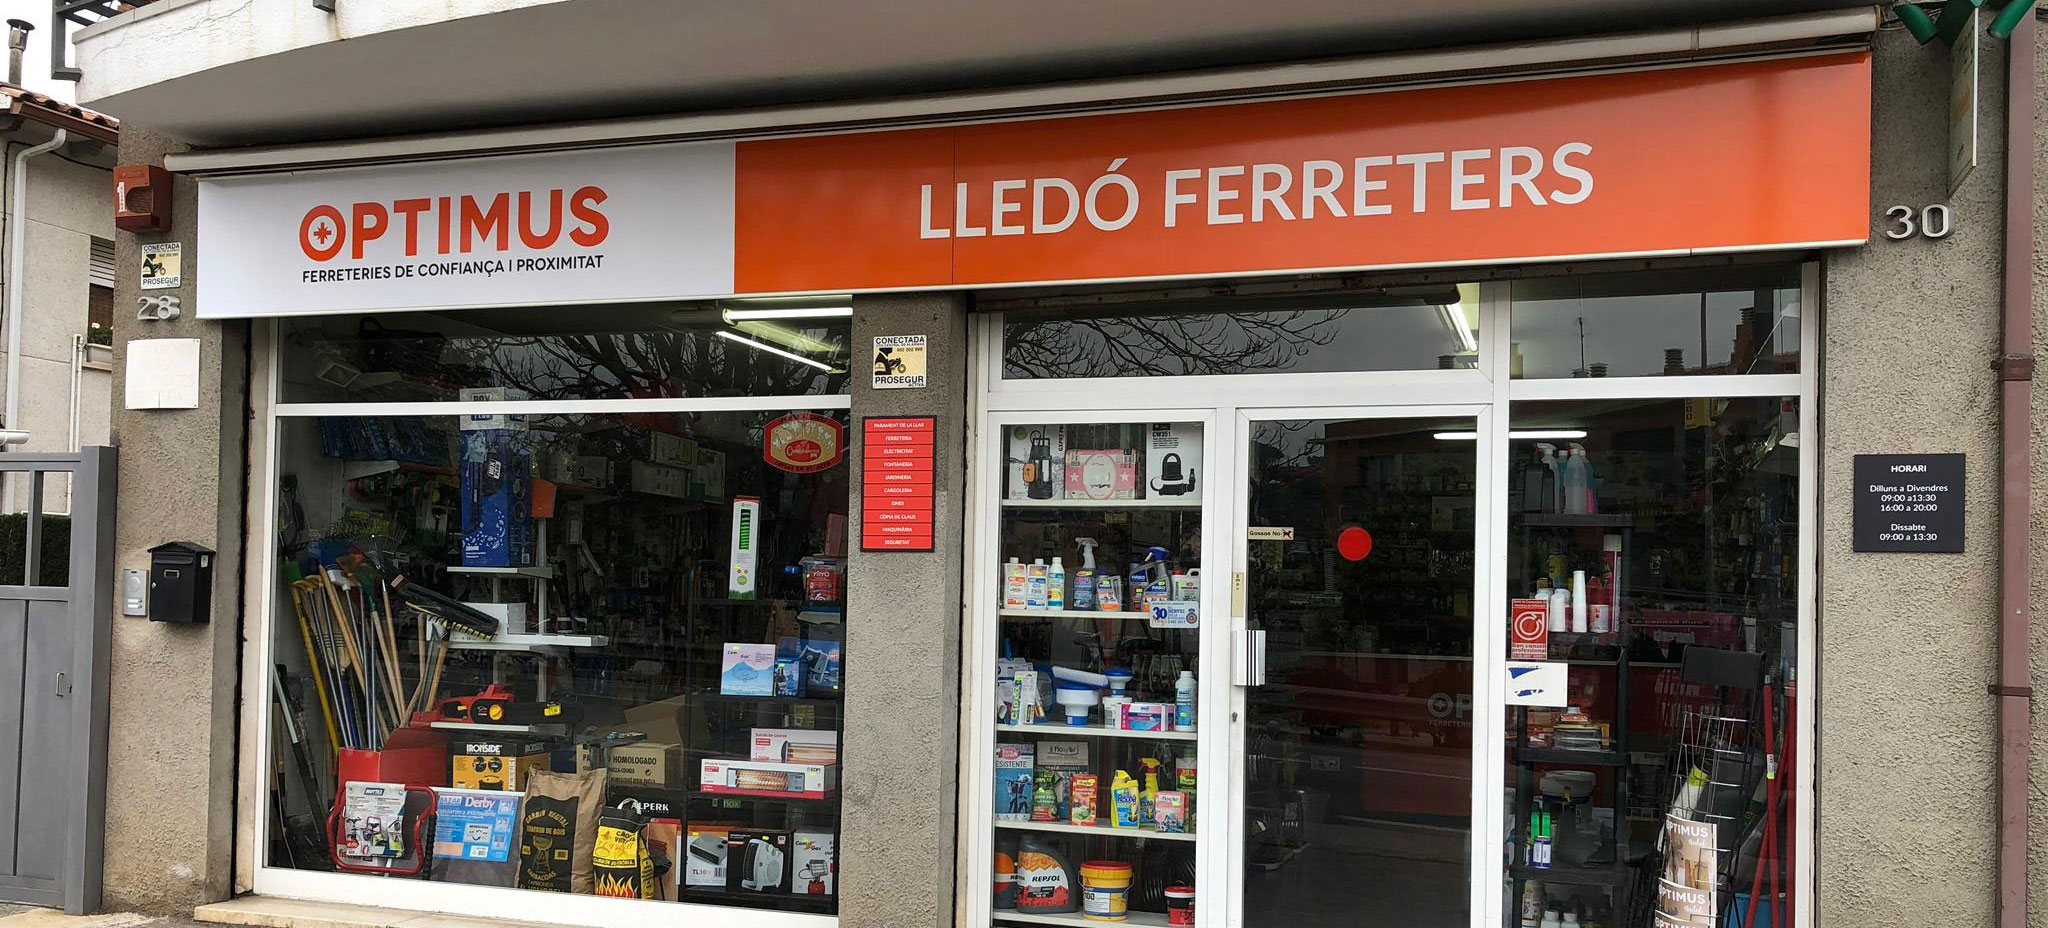 LLEDO FERRETERS S.L.